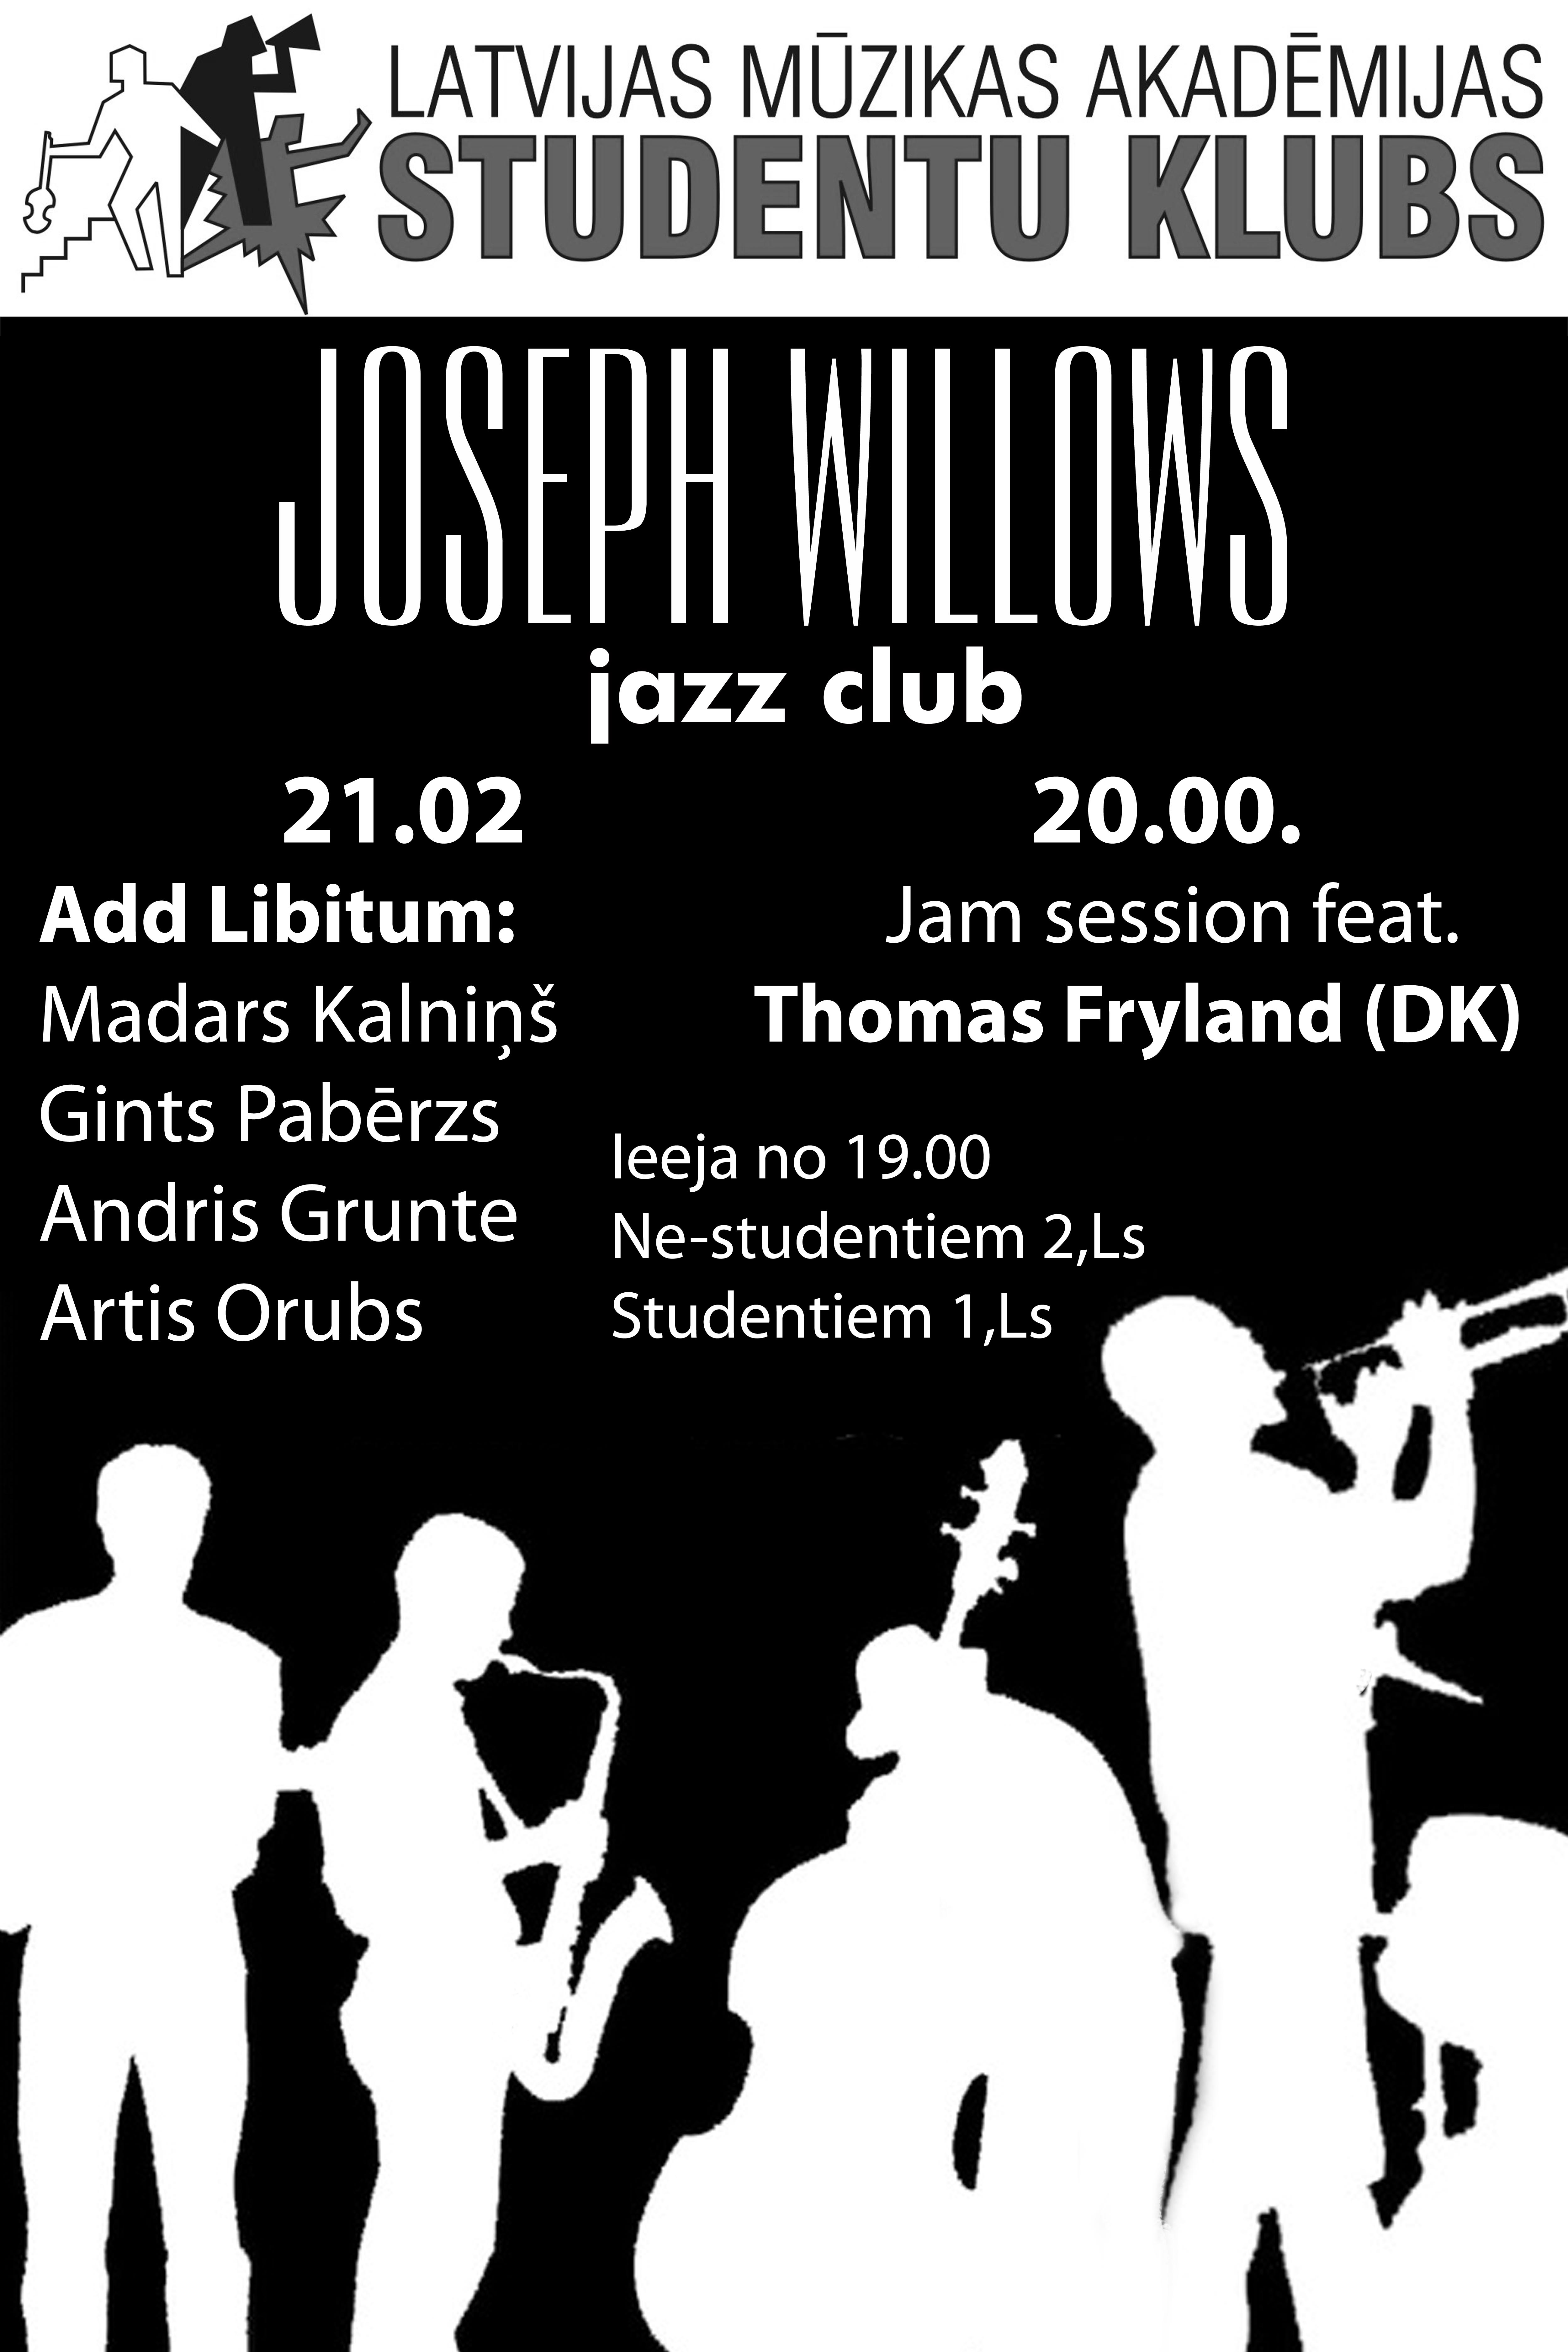 Josepf Willows Jazz Club